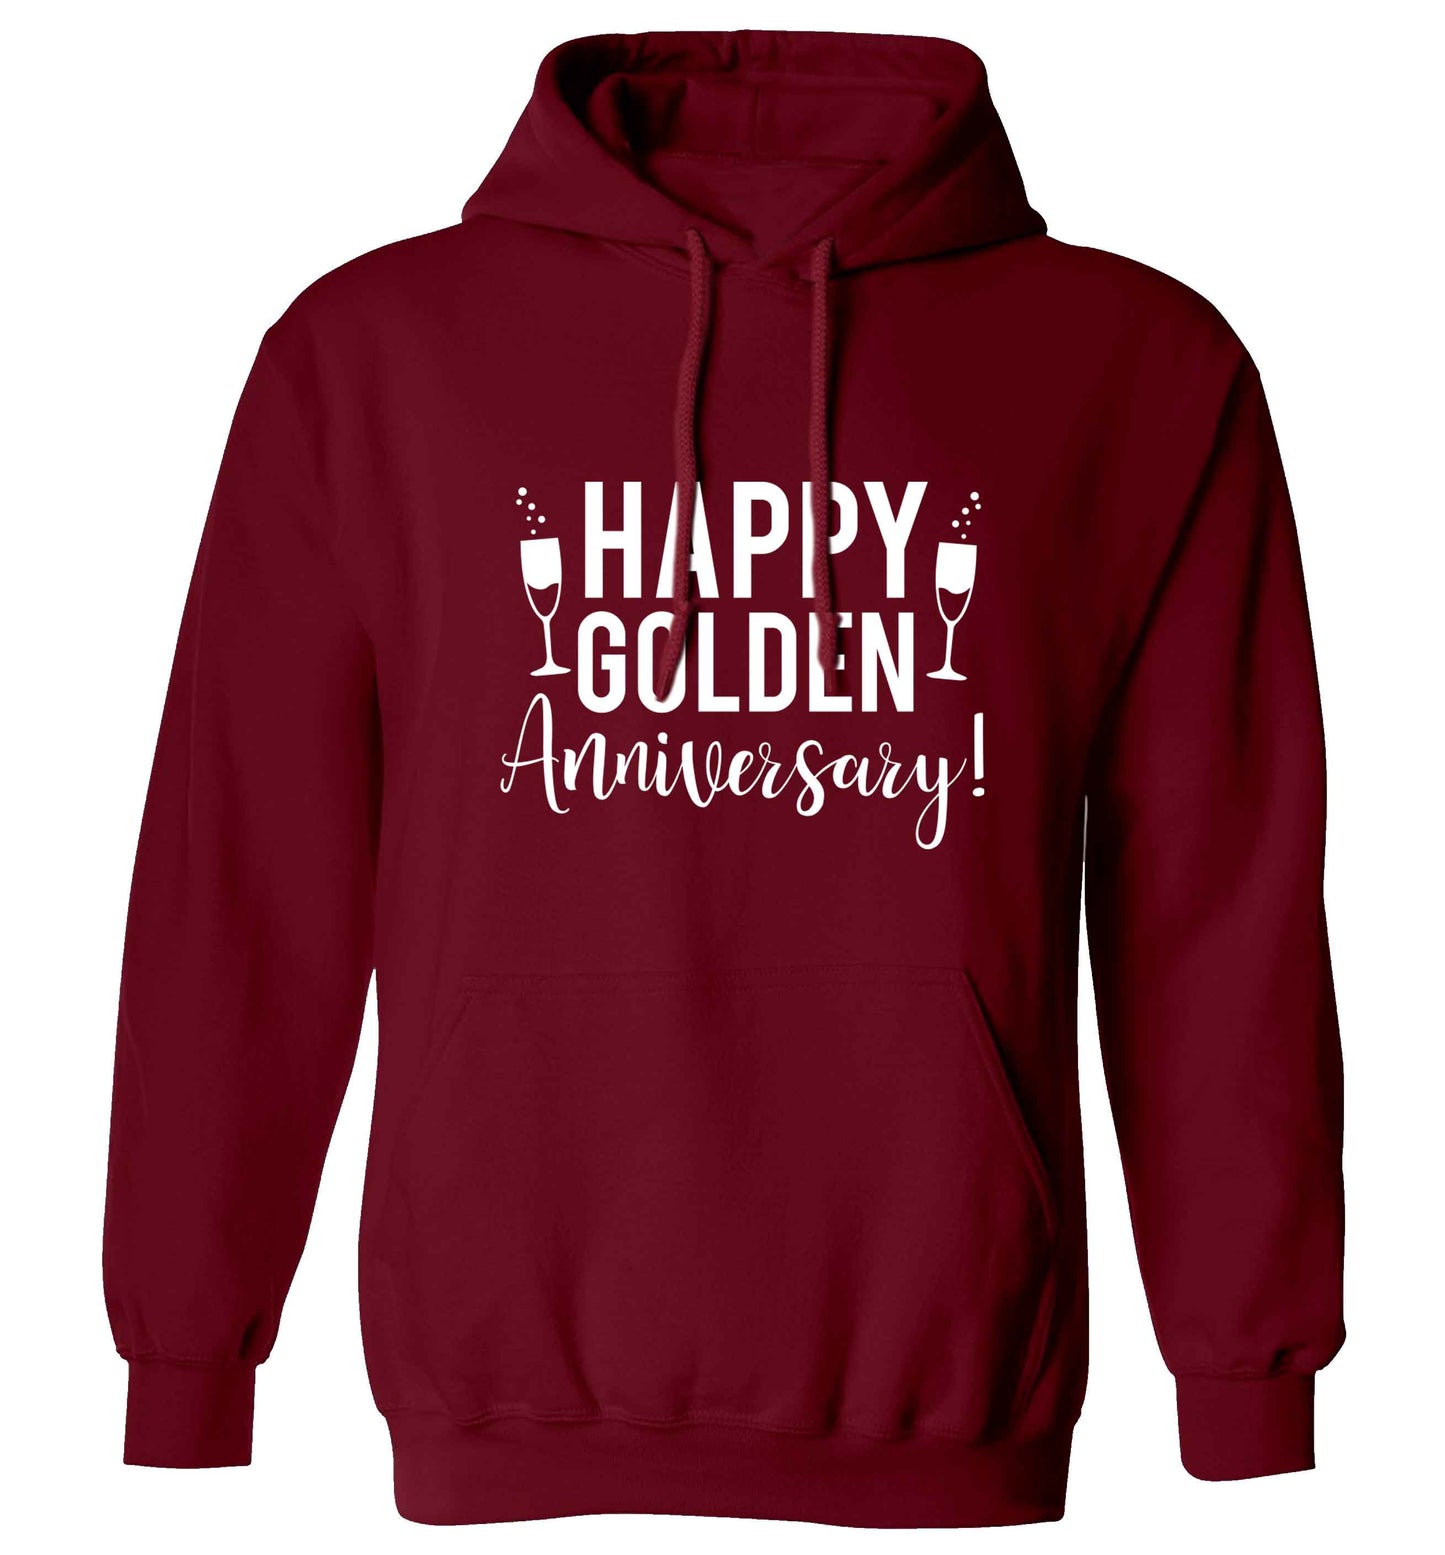 Happy golden anniversary! adults unisex maroon hoodie 2XL